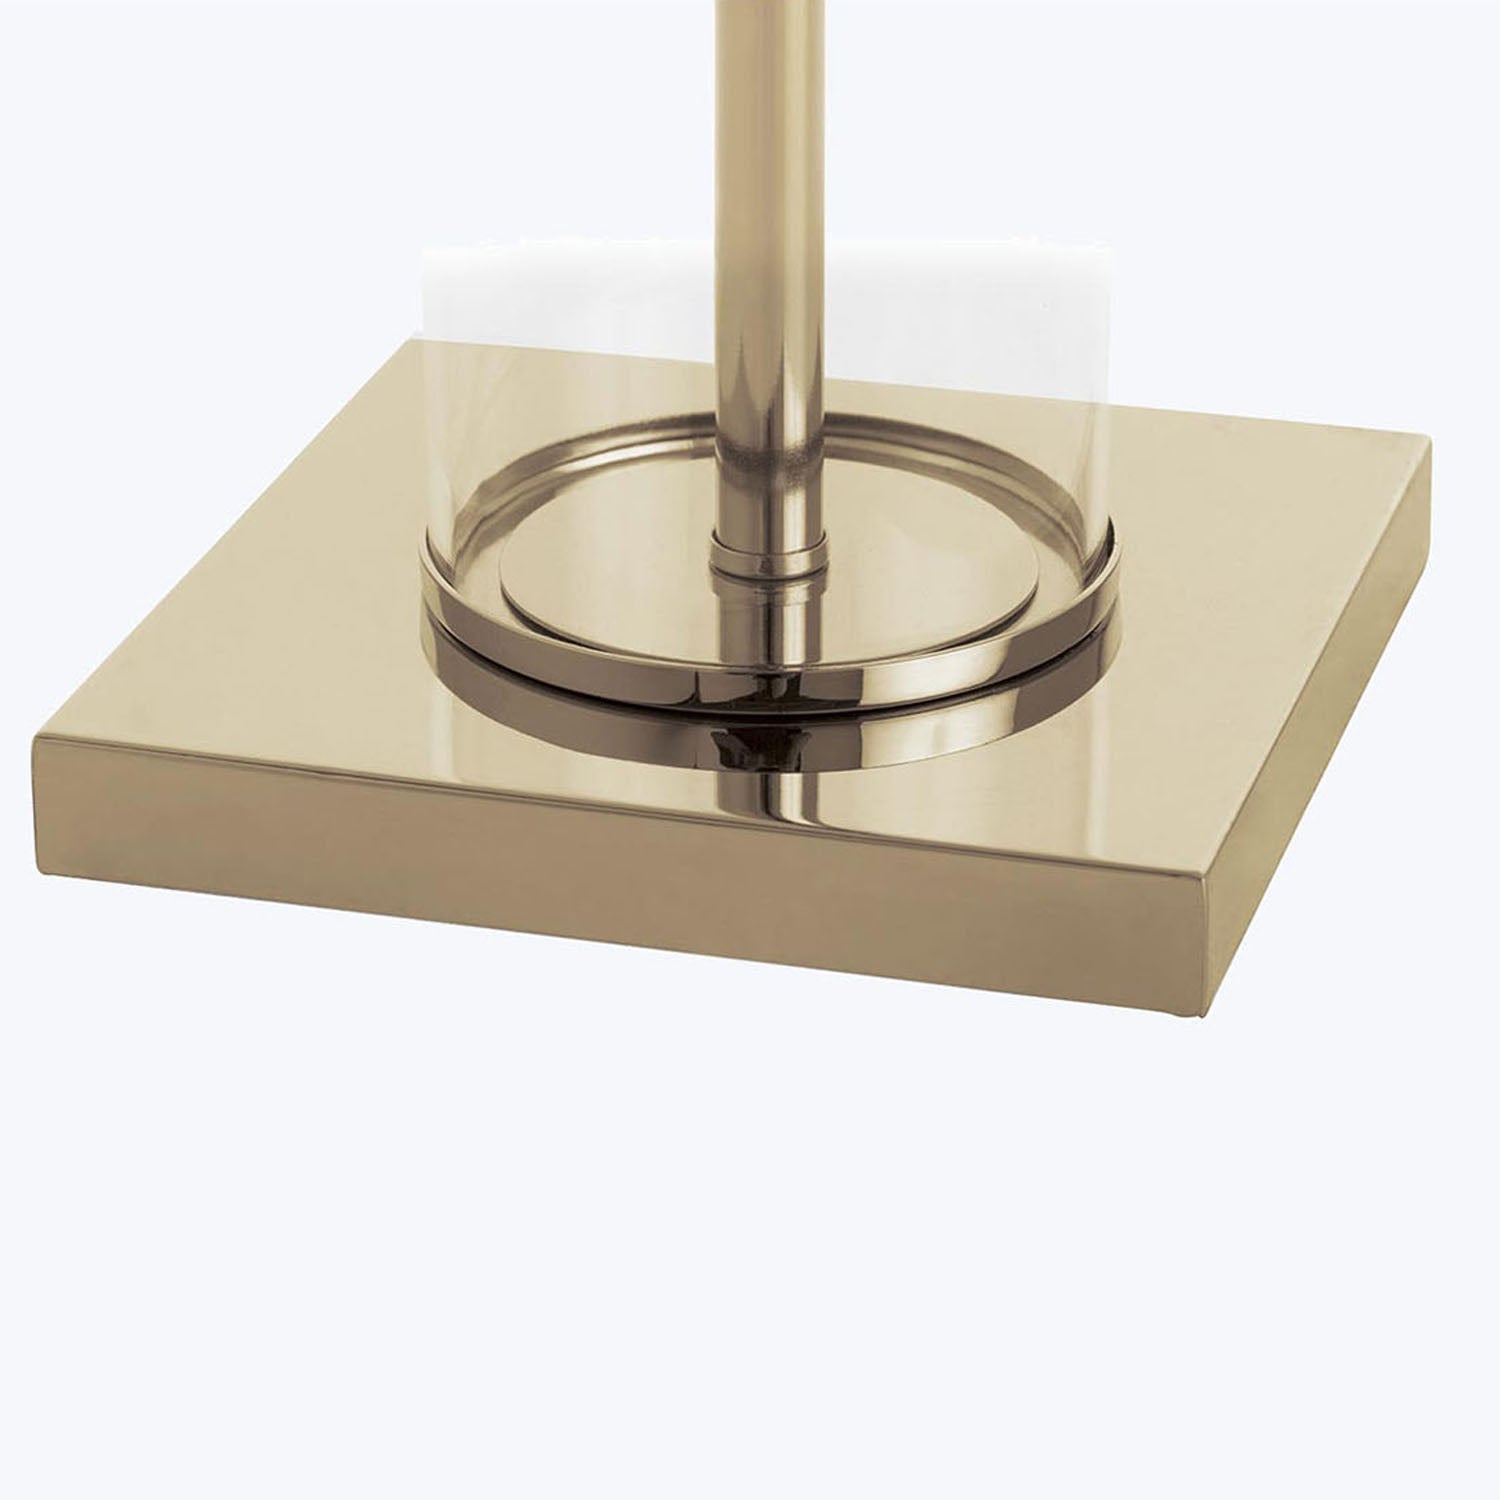 Sleek and modern square-shaped lamp base with polished gold finish.